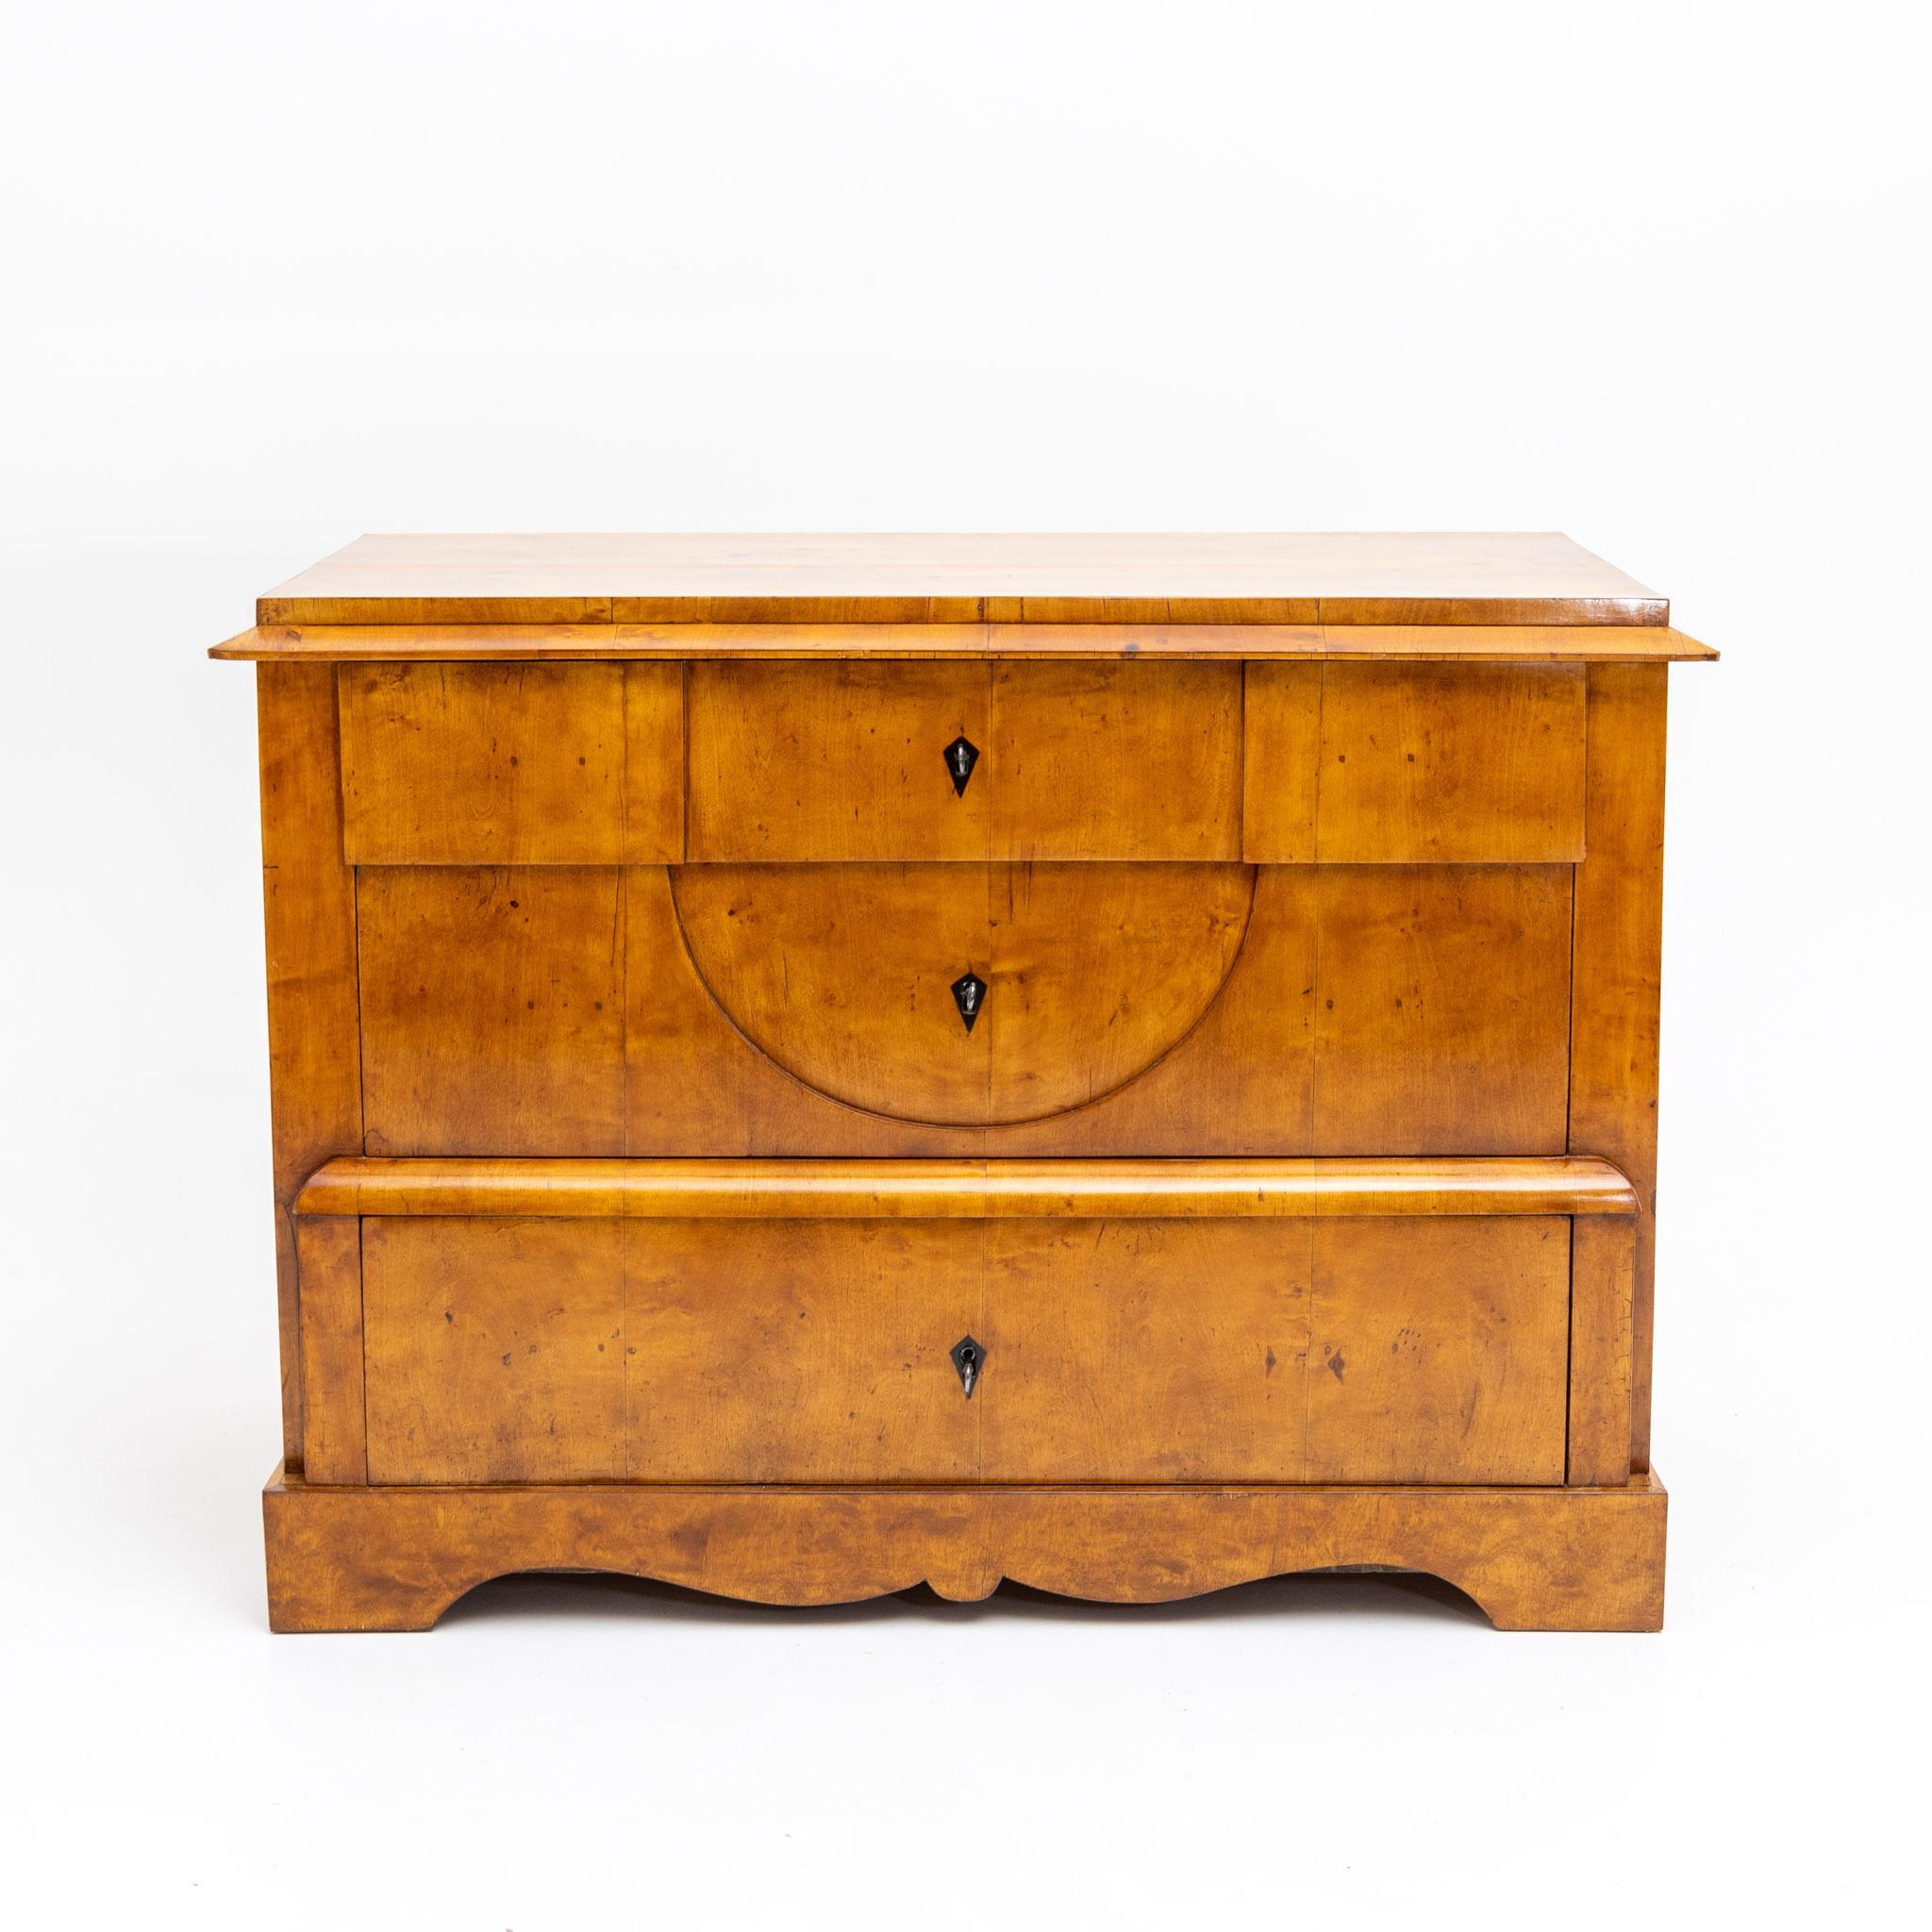 Biedermeier dresser with three drawers and curved frame in birch veneer.